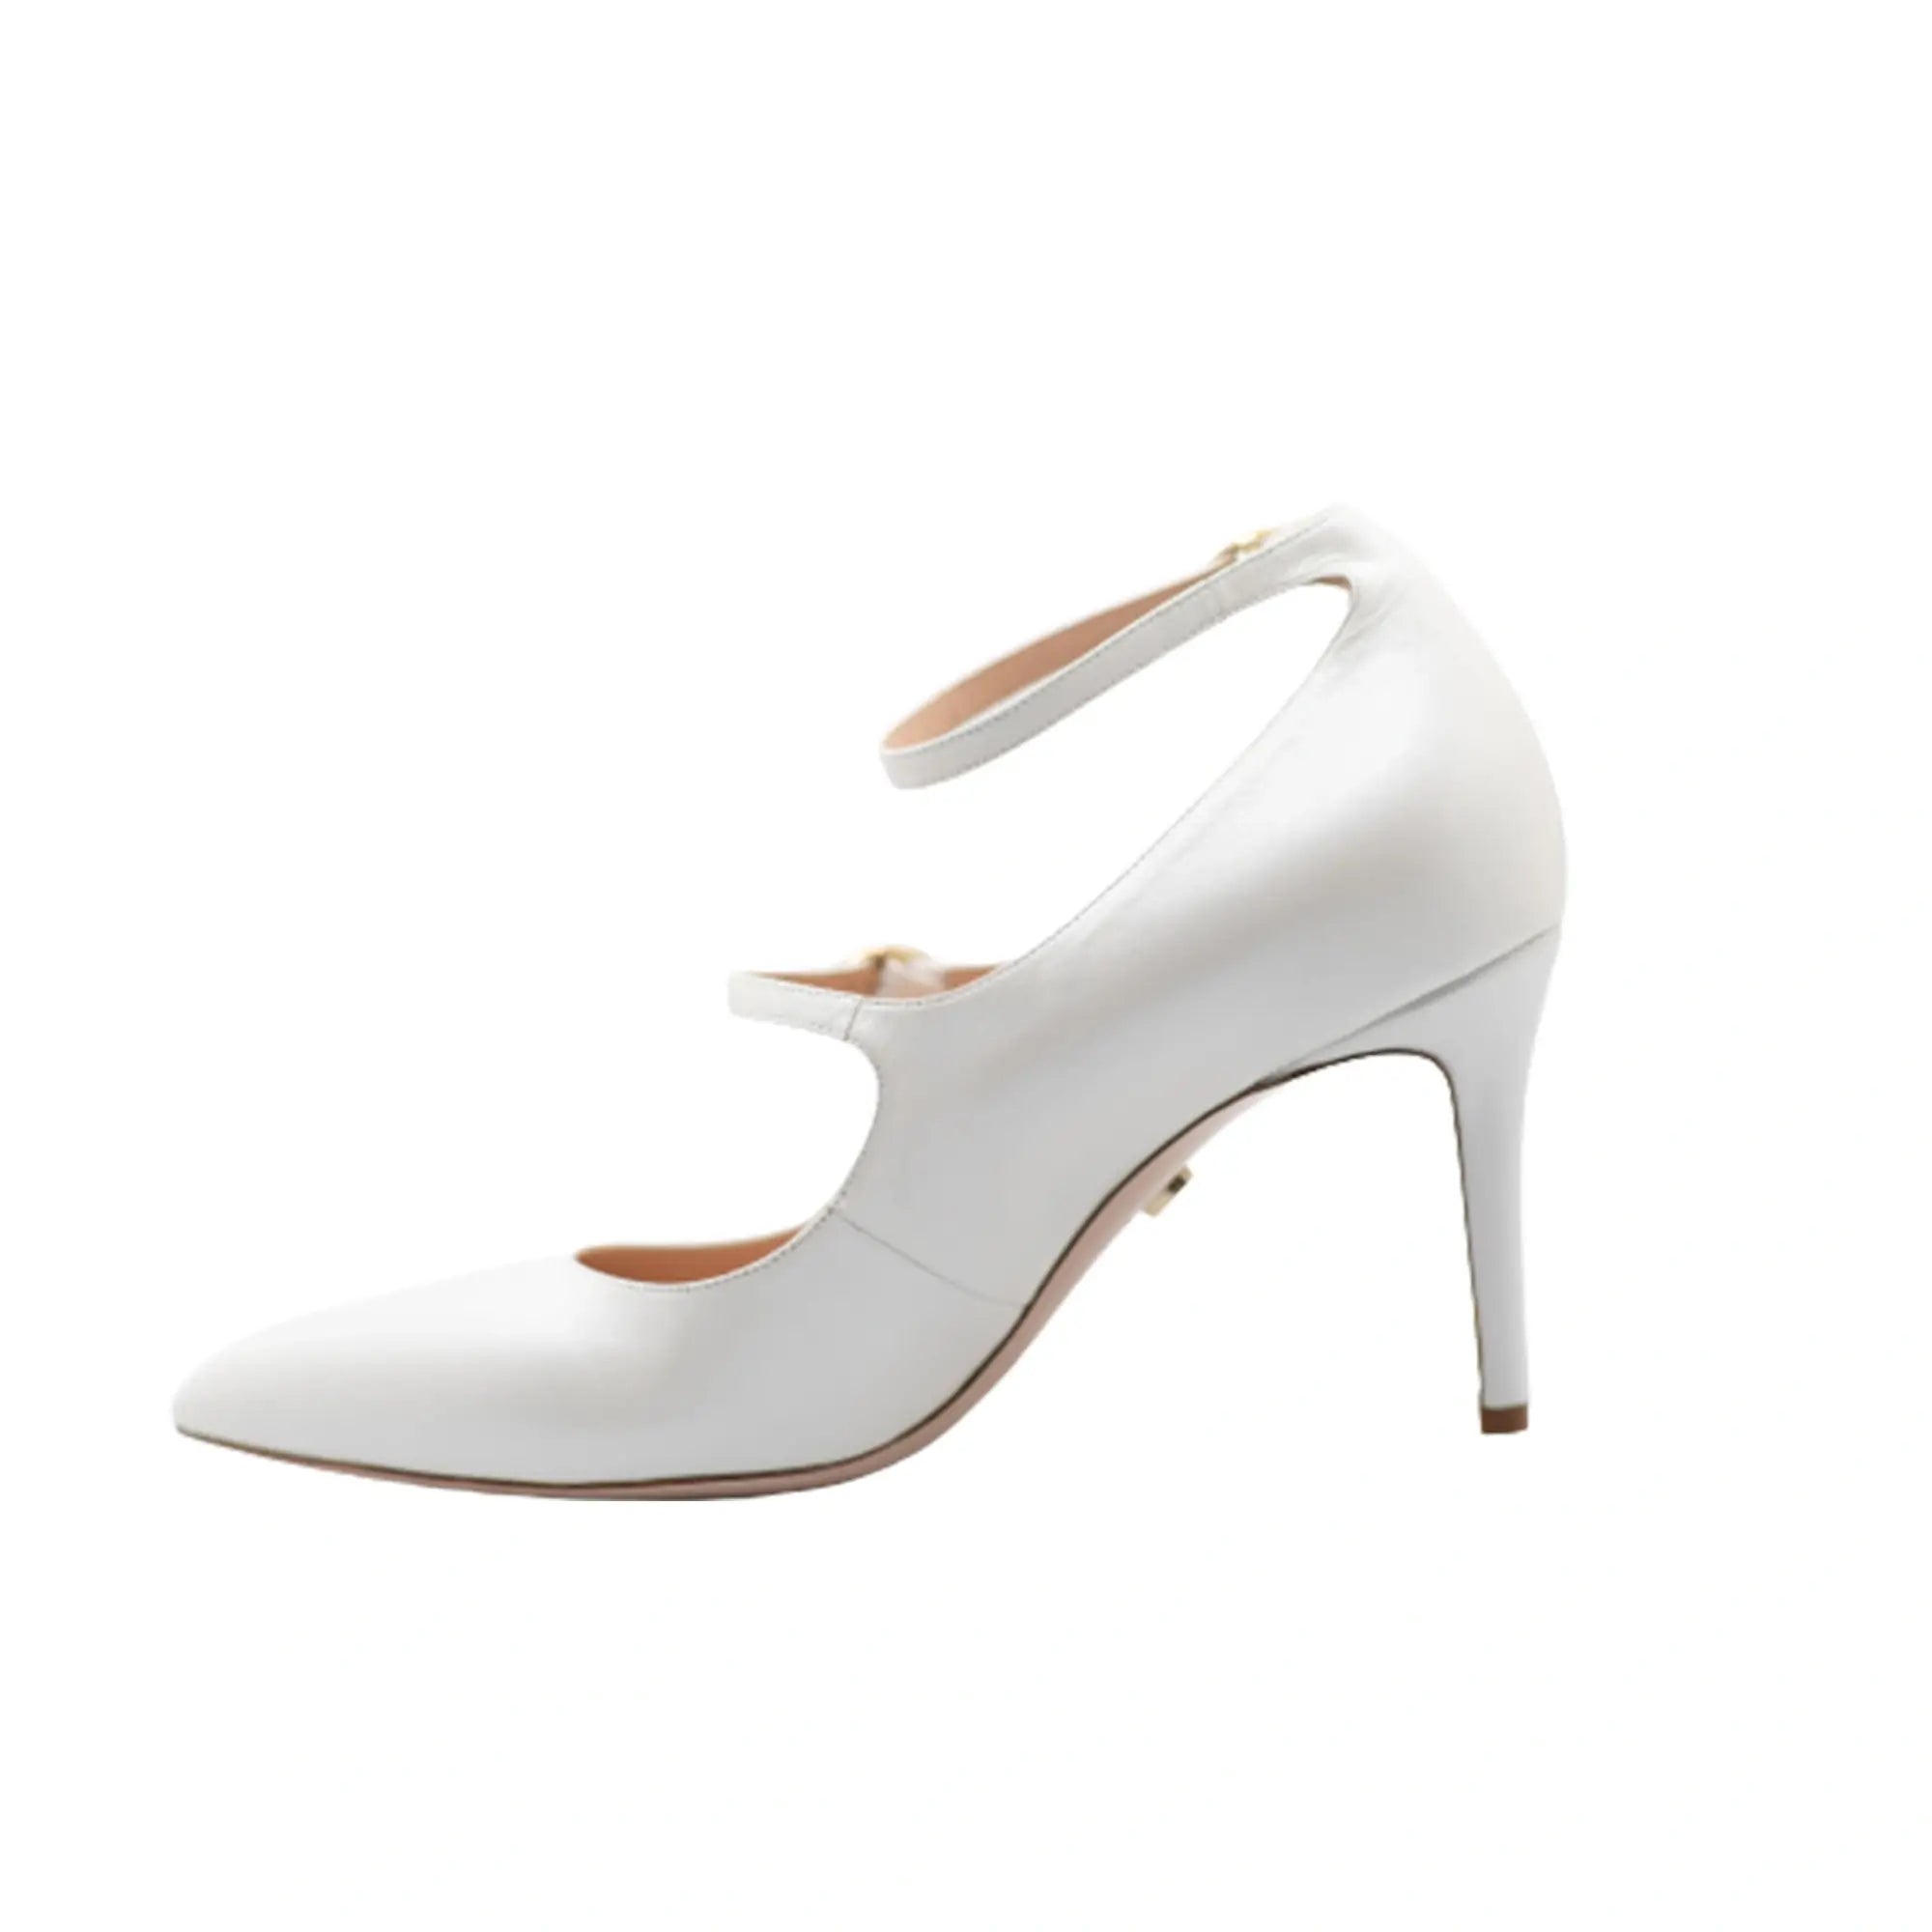 E'MAR Italy | Meraki - Pointed Toe Pump: Wedding Heels For Women